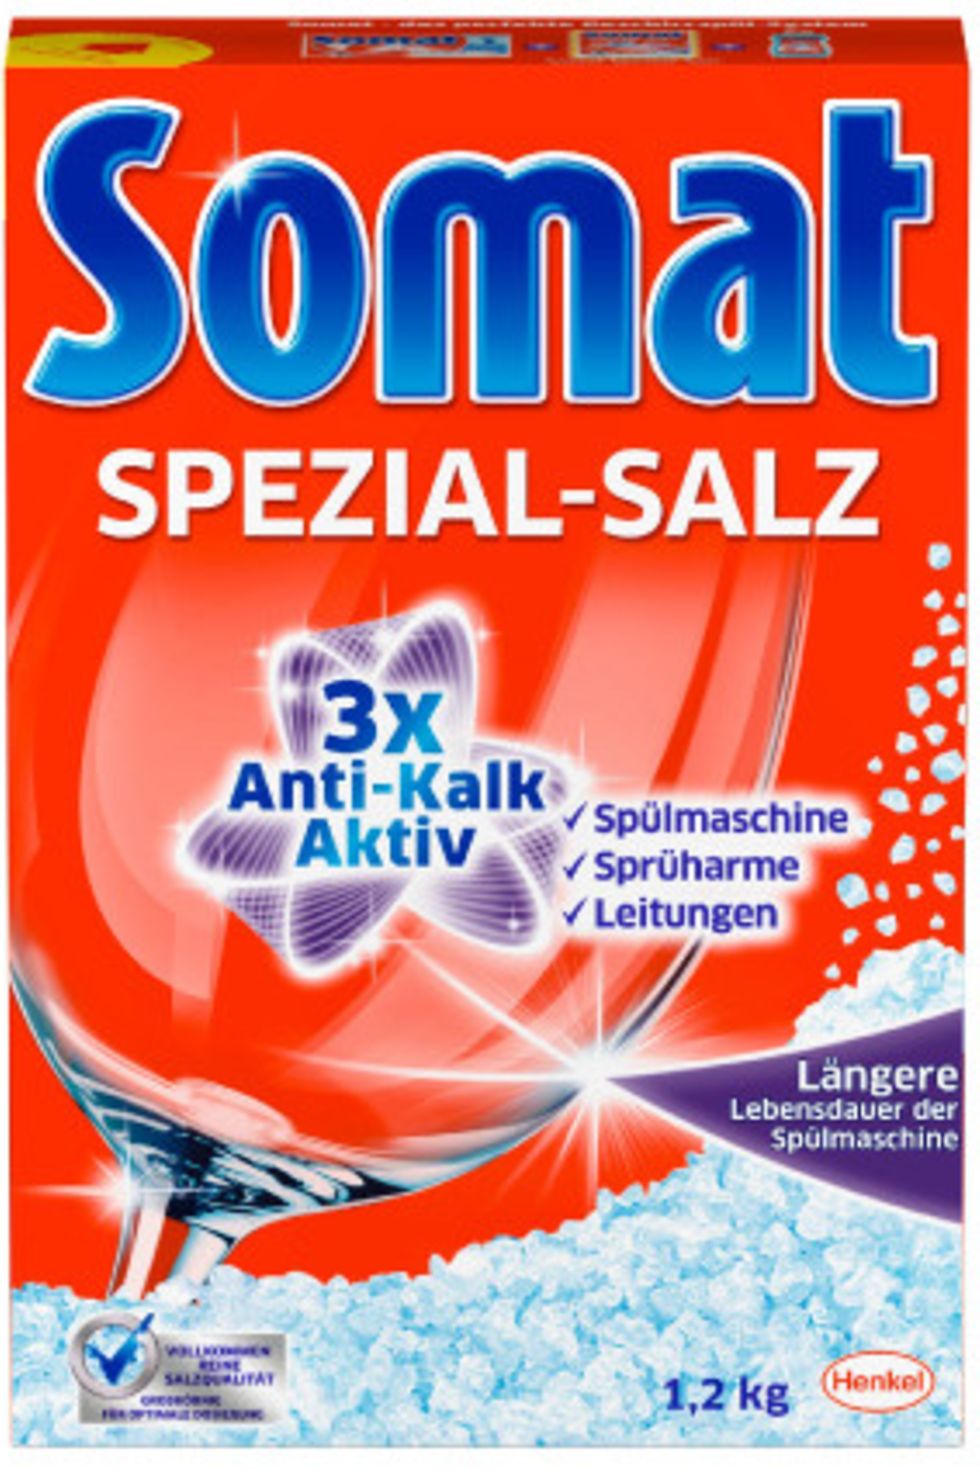 Somat "Spezial-Salz 3x Anti-Kalk-Aktiv" 